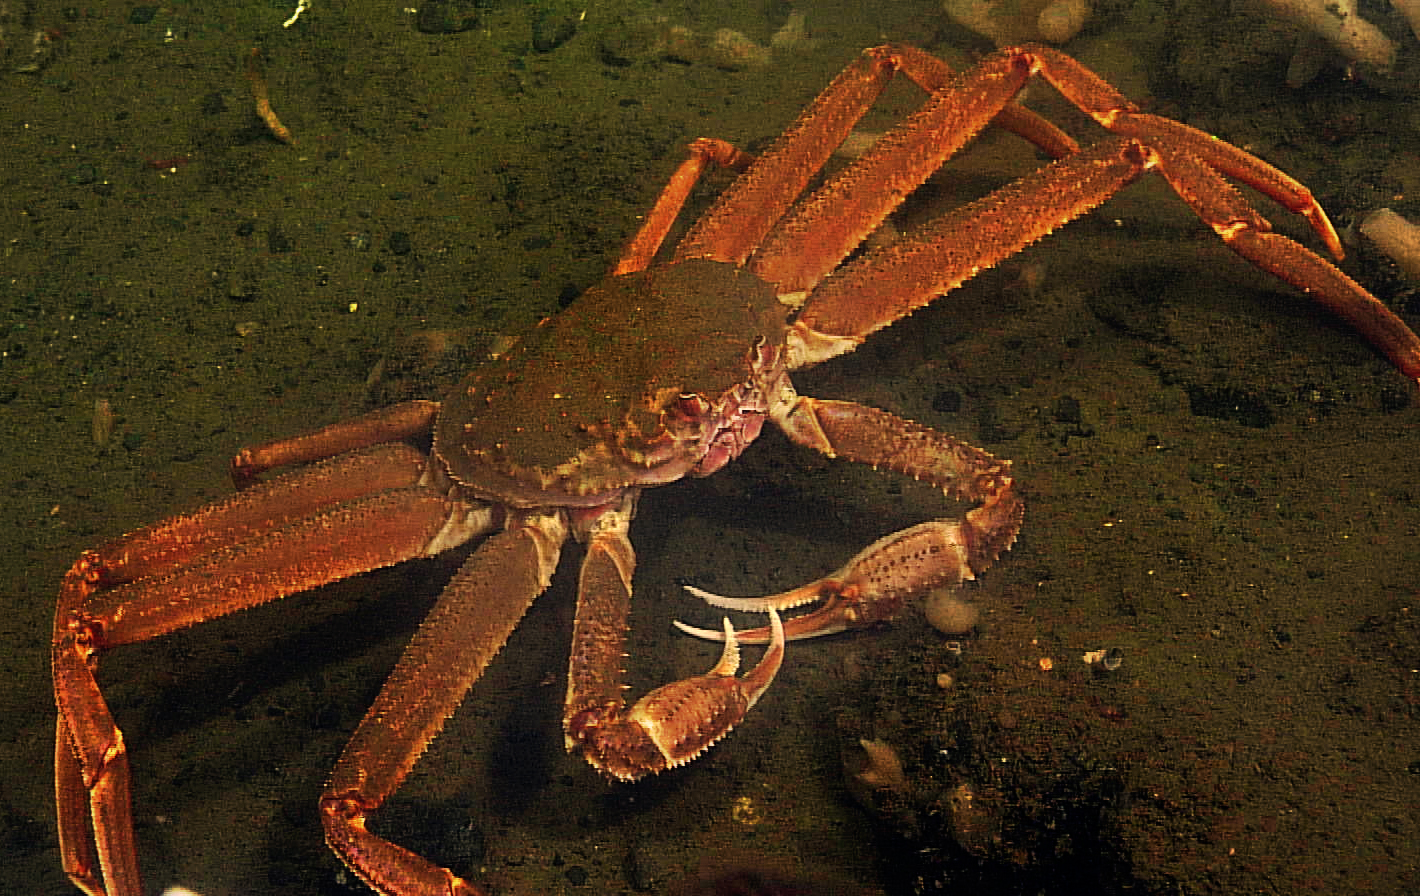 Tanner Crab in Saanich Inlet, October 2011.